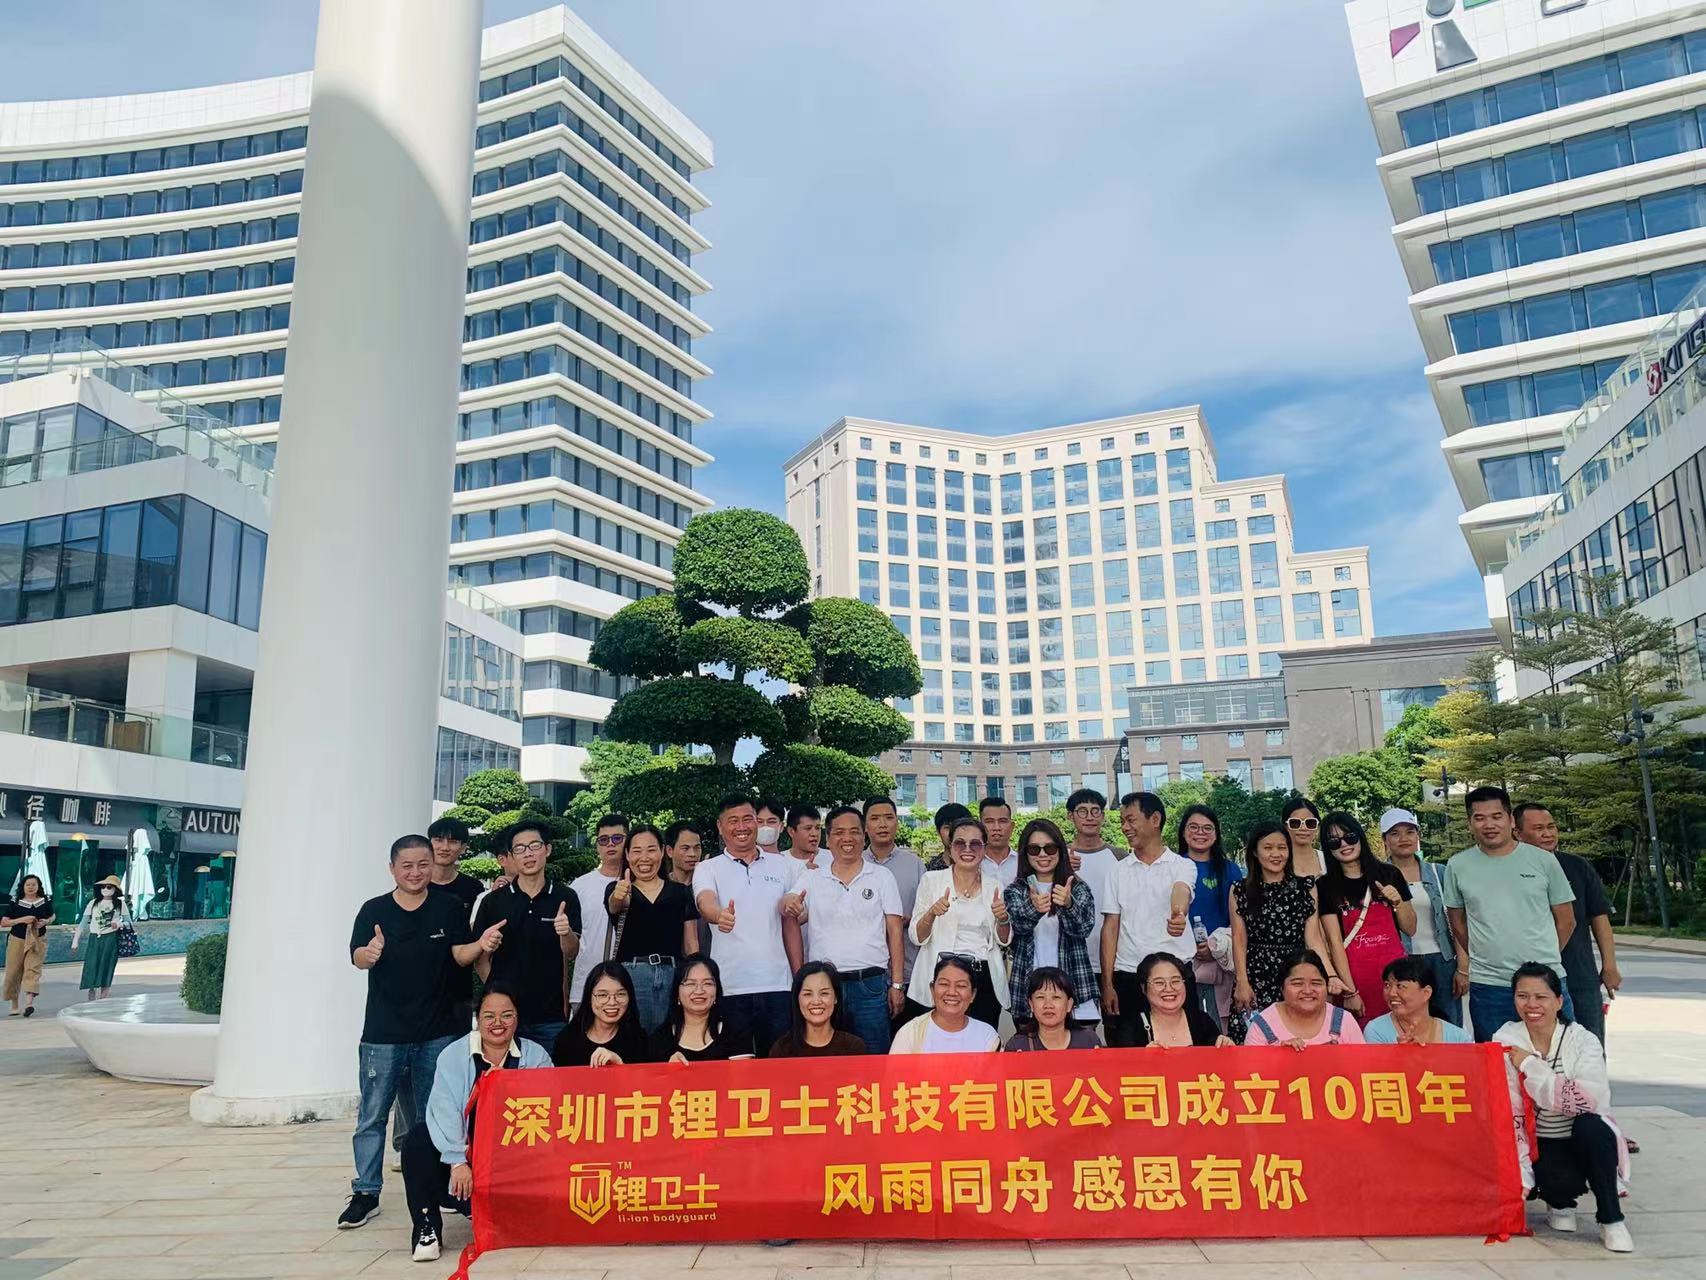 Celebrating Its 10th Anniversary, Shenzhen Li-ion Battery Bodyguard Technology Co., Ltd. Had A Team Building Activity - A Trip to Xiamen